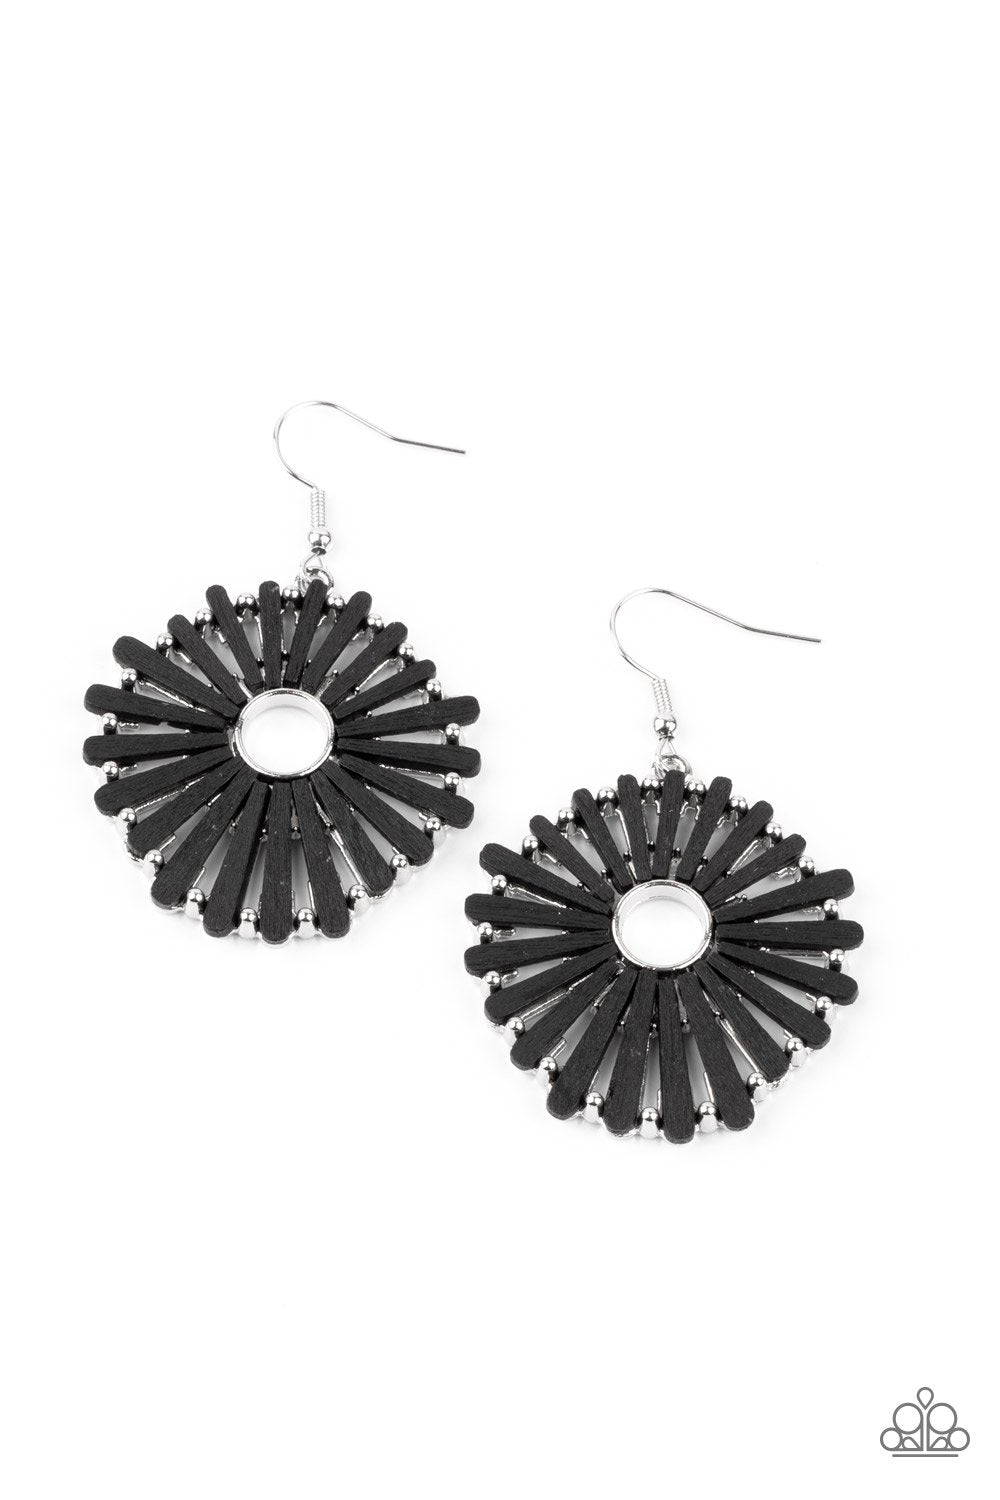 SPOKE Too Soon Black Wood Earrings - Paparazzi Accessories- lightbox - CarasShop.com - $5 Jewelry by Cara Jewels